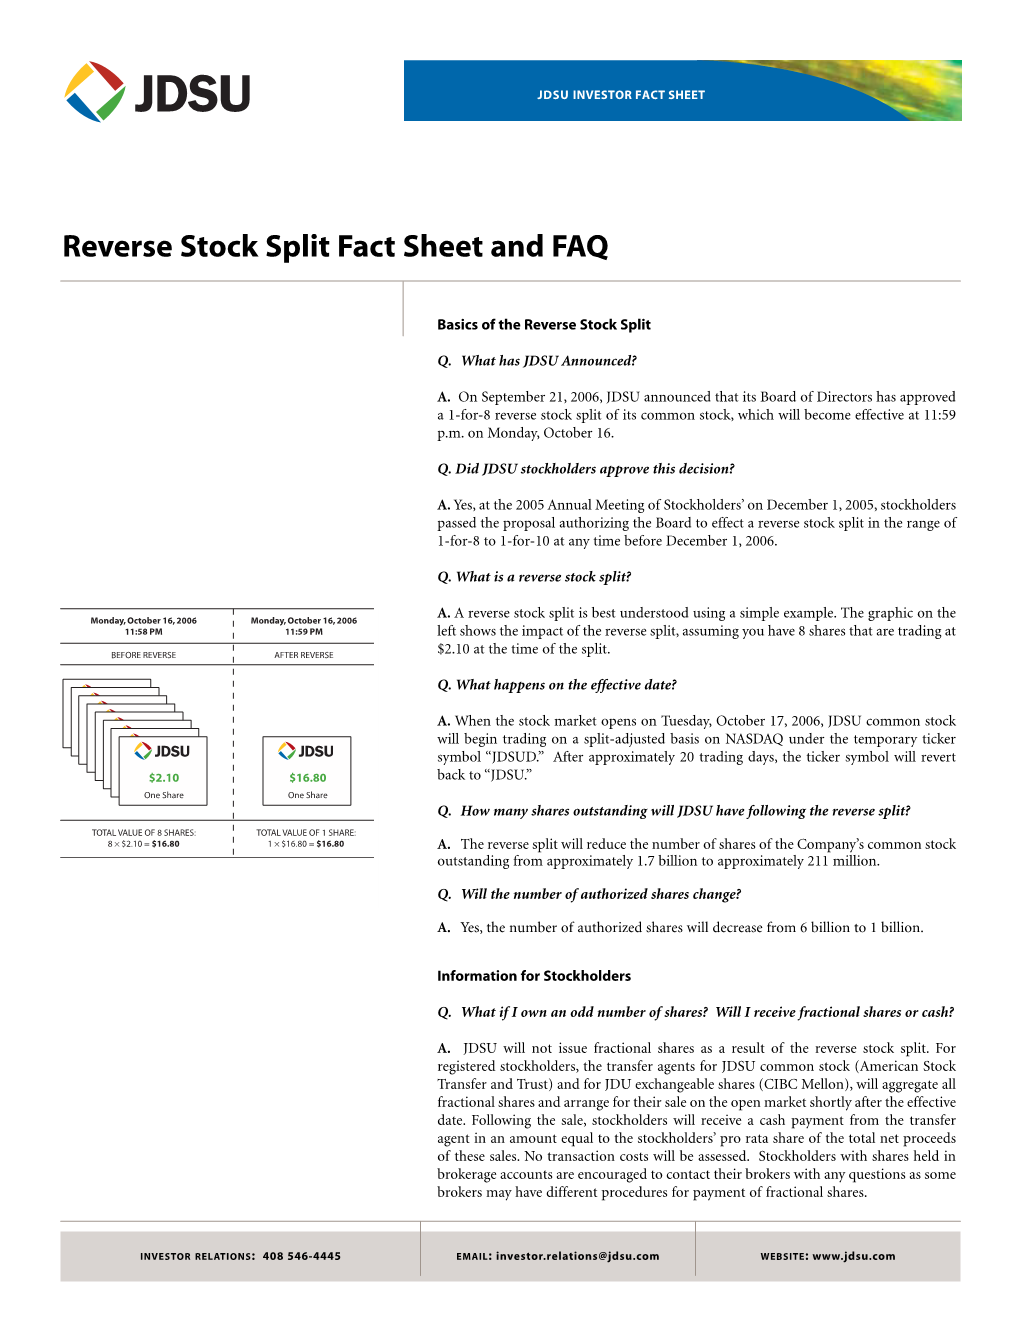 Reverse Stock Split Fact Sheet and FAQ